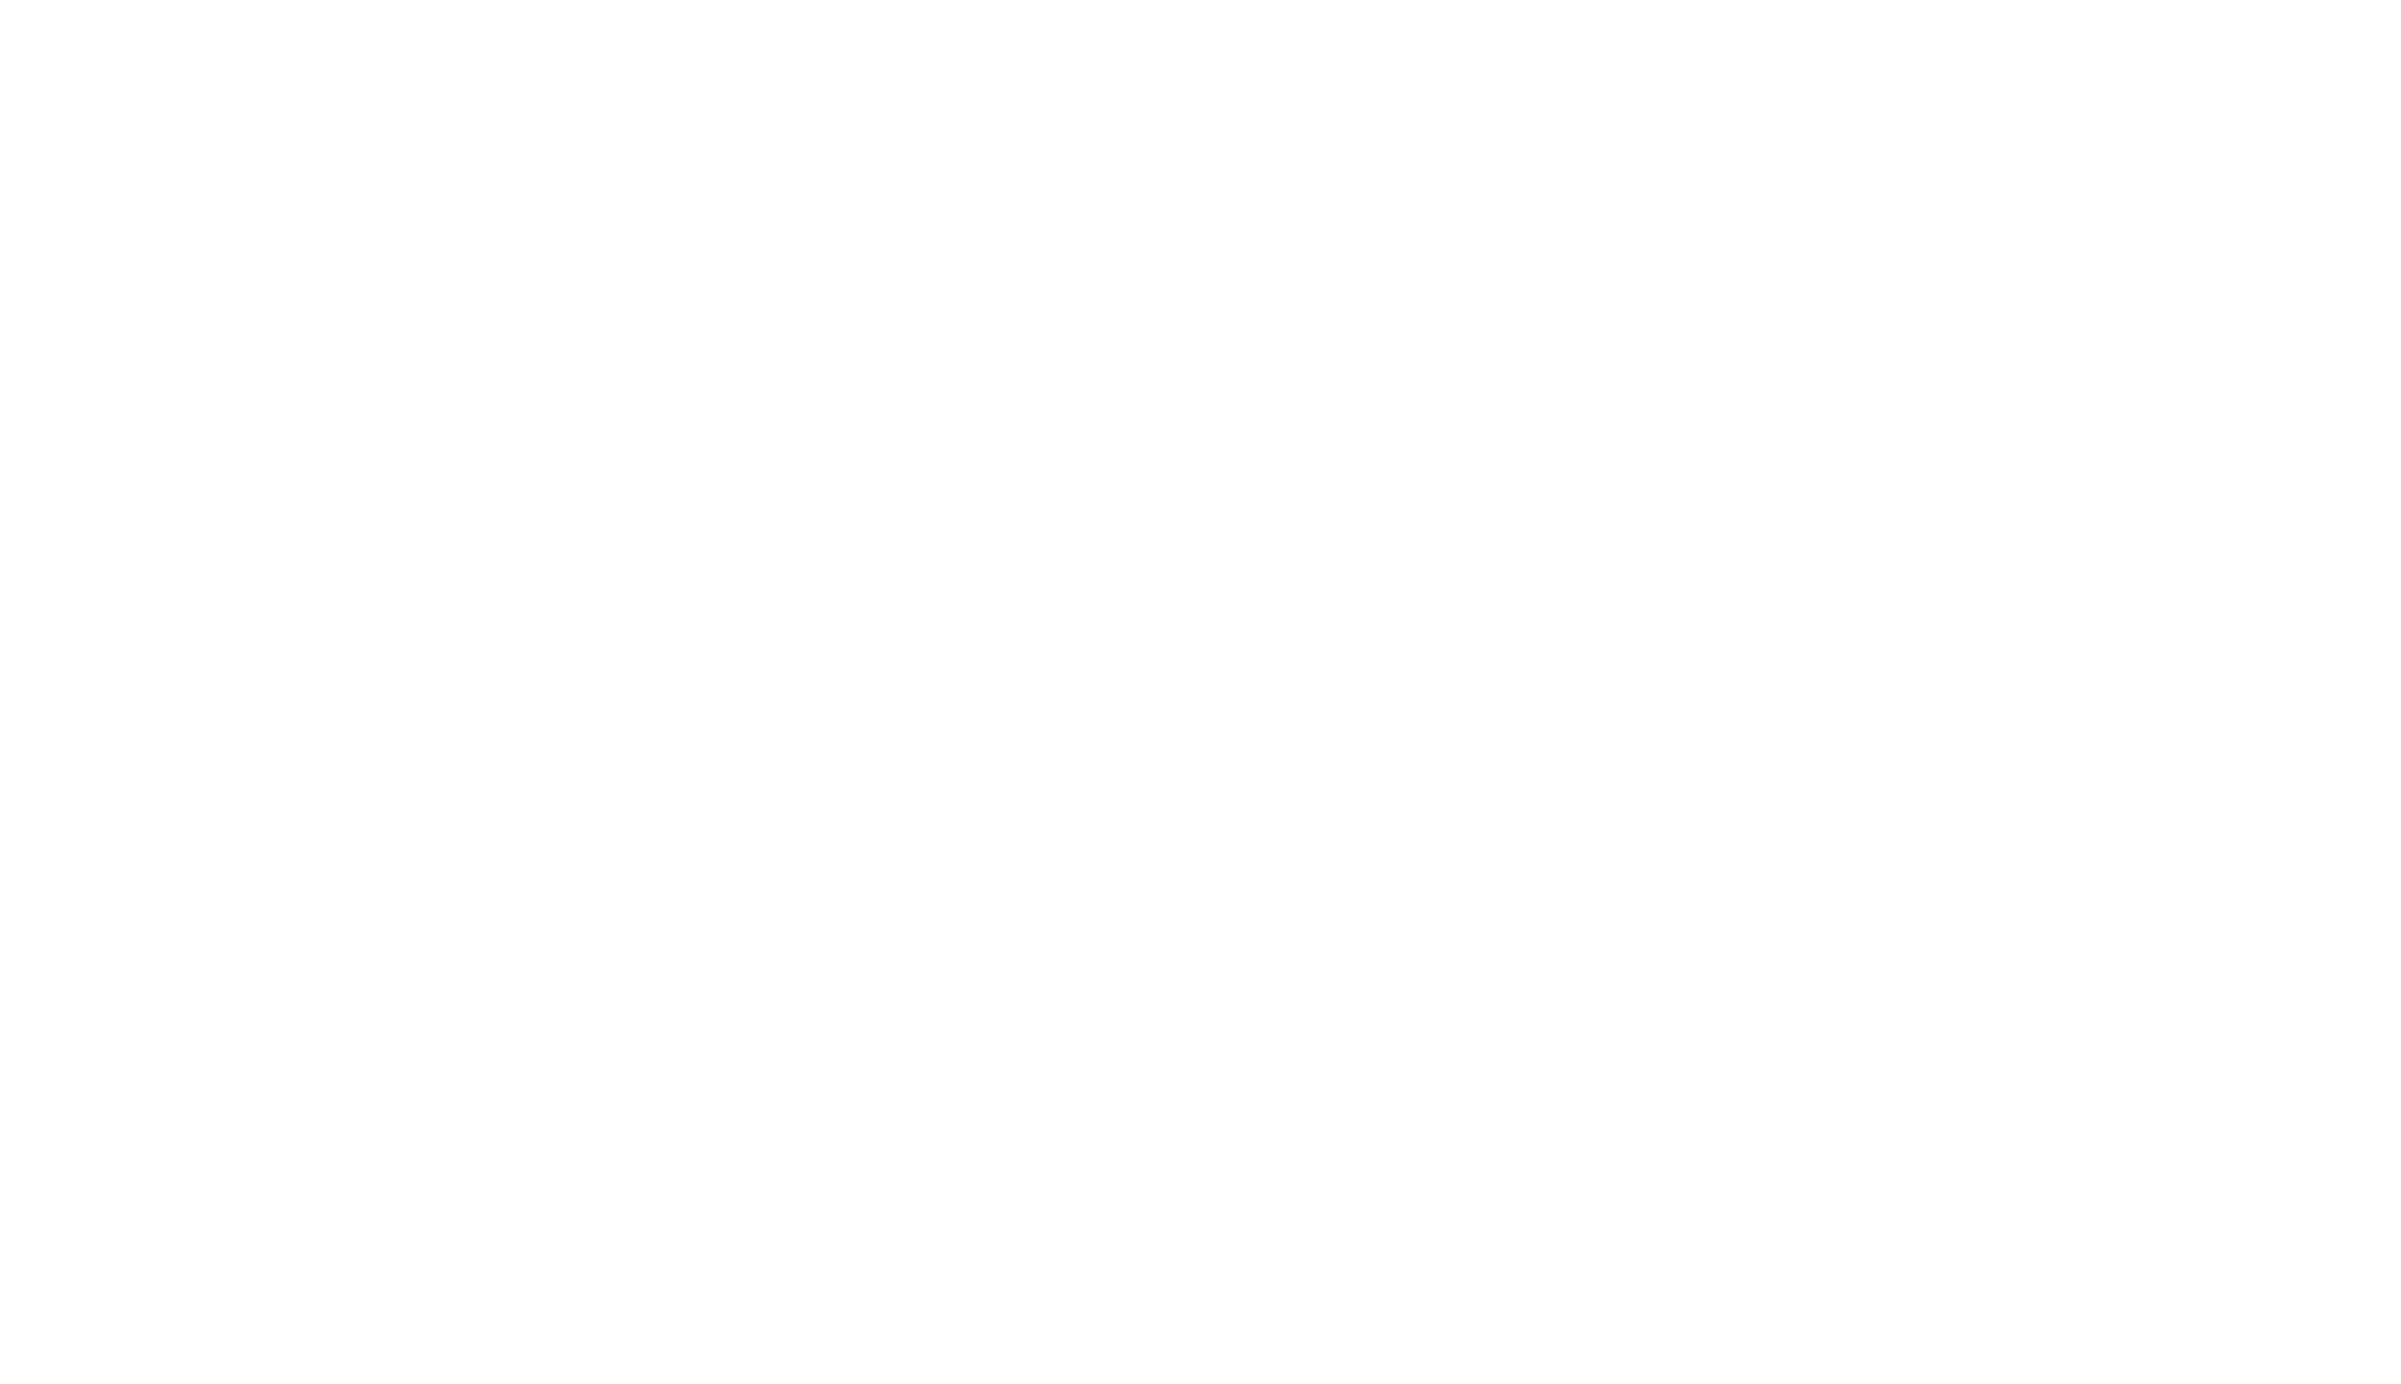 OKC Thunder Primary Icon bw logo